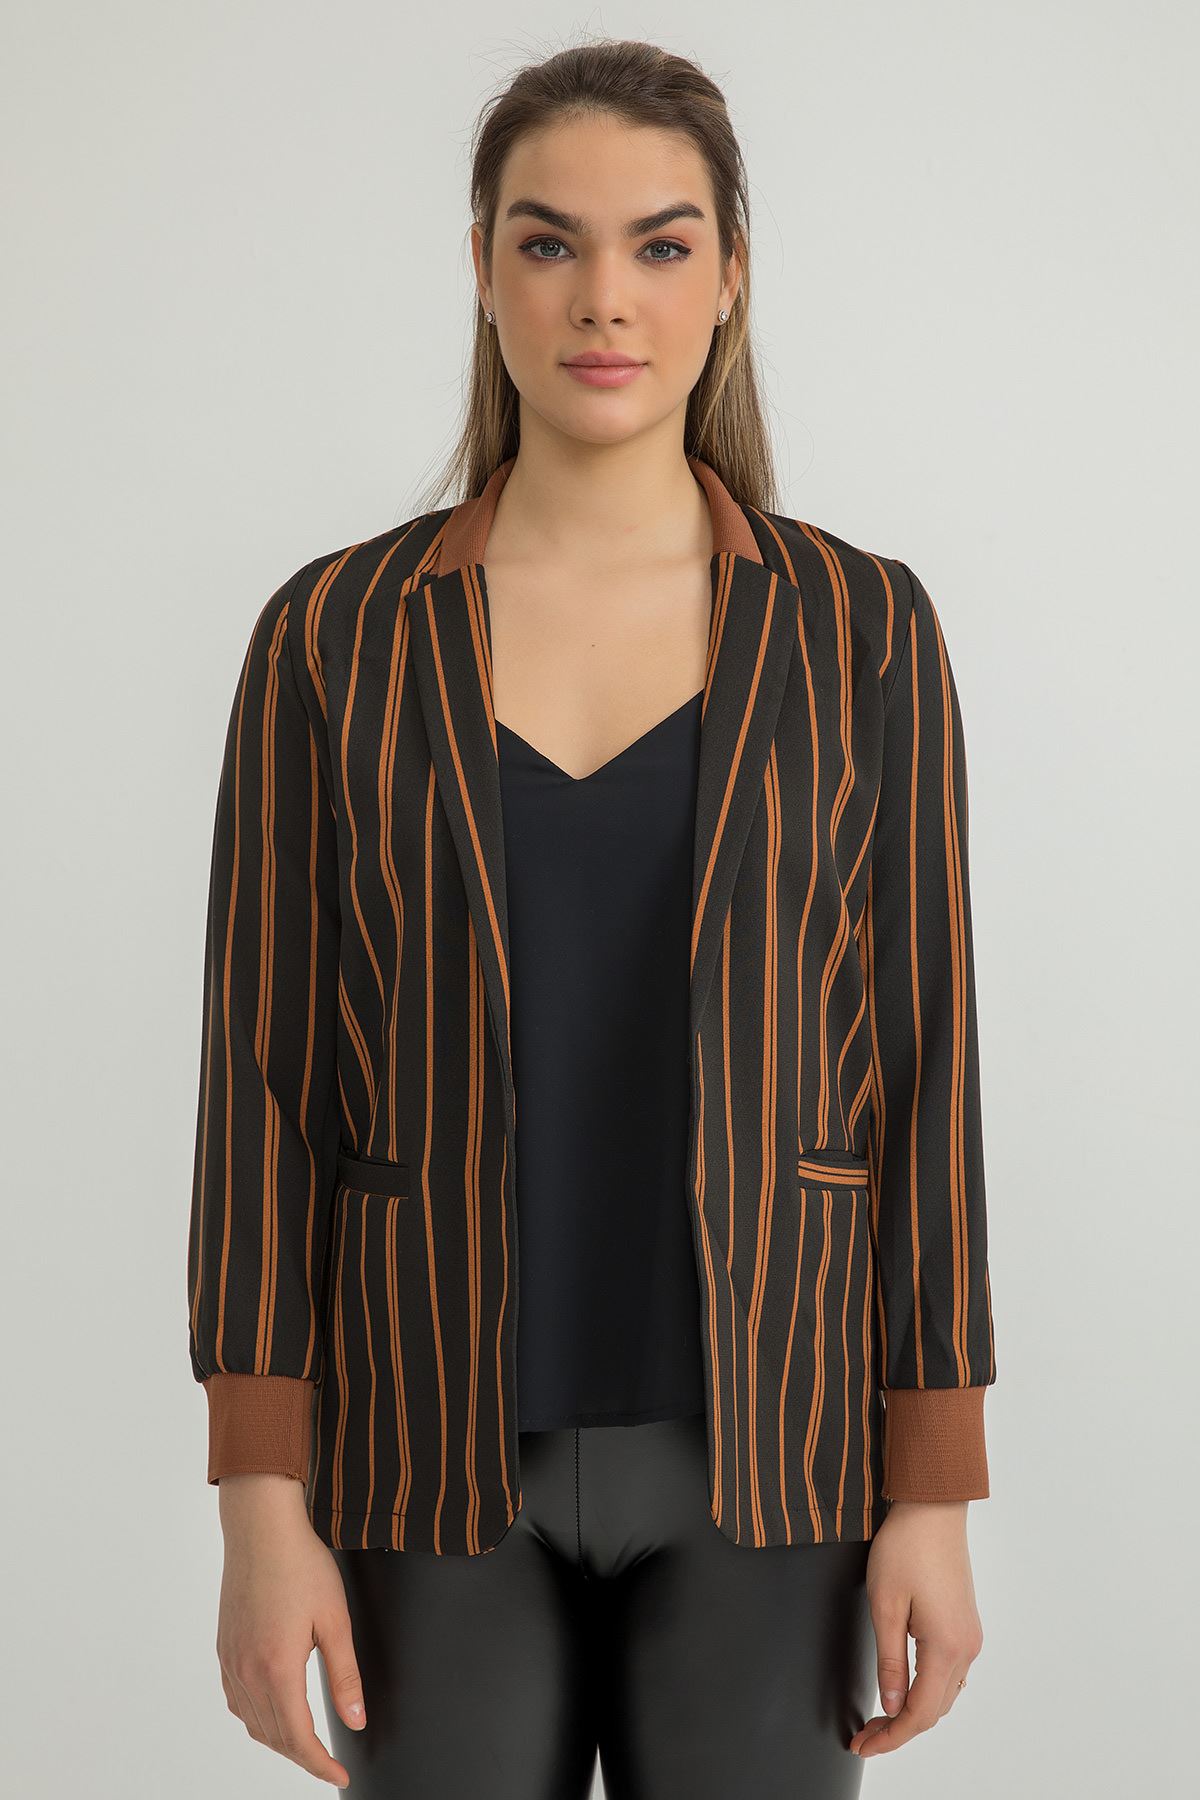 Atlas Fabric Long Sleeve Revere Collar Classical Striped Women Jacket - Light Brown